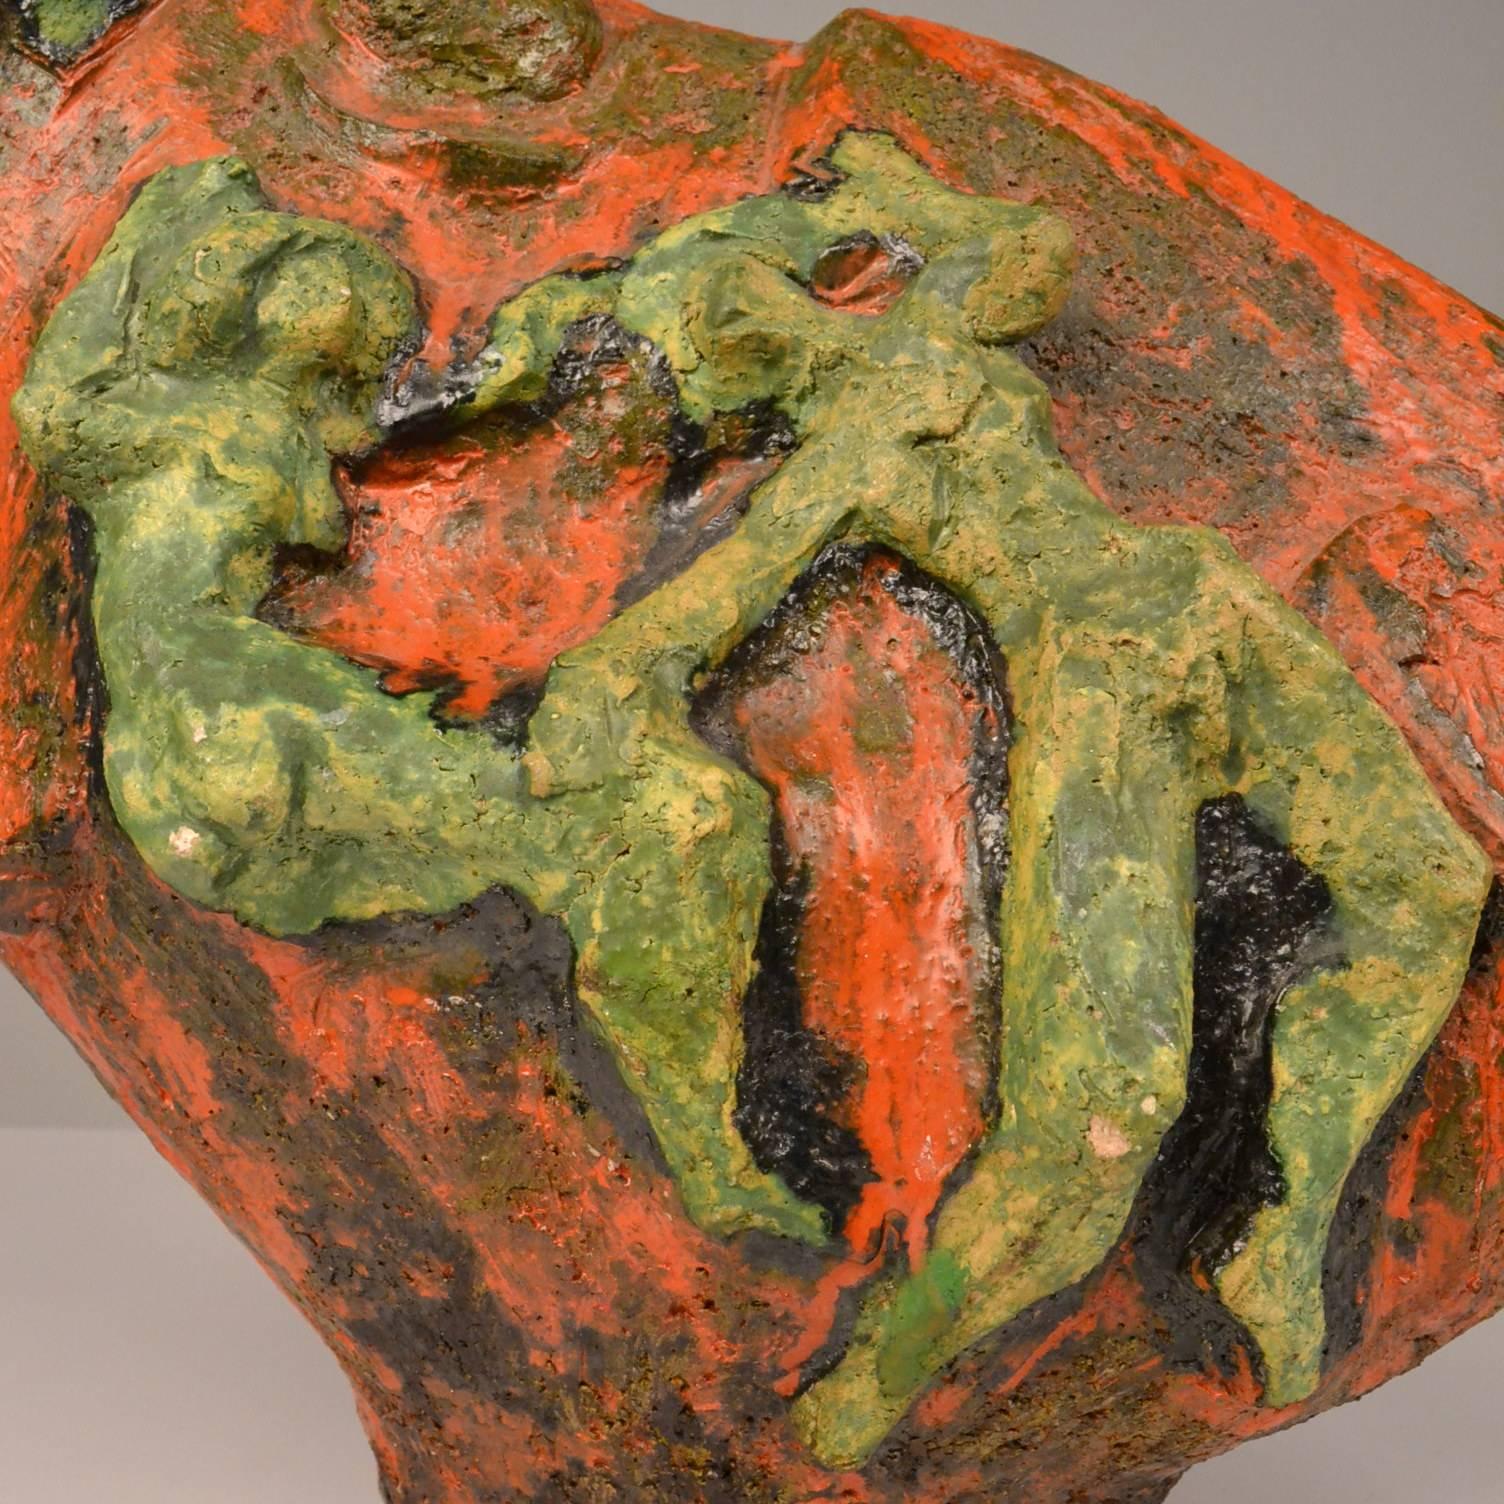 Glazed Large Expressionist Ceramic Bird Sculpture with Dancing FiguresDutch Cobra Style